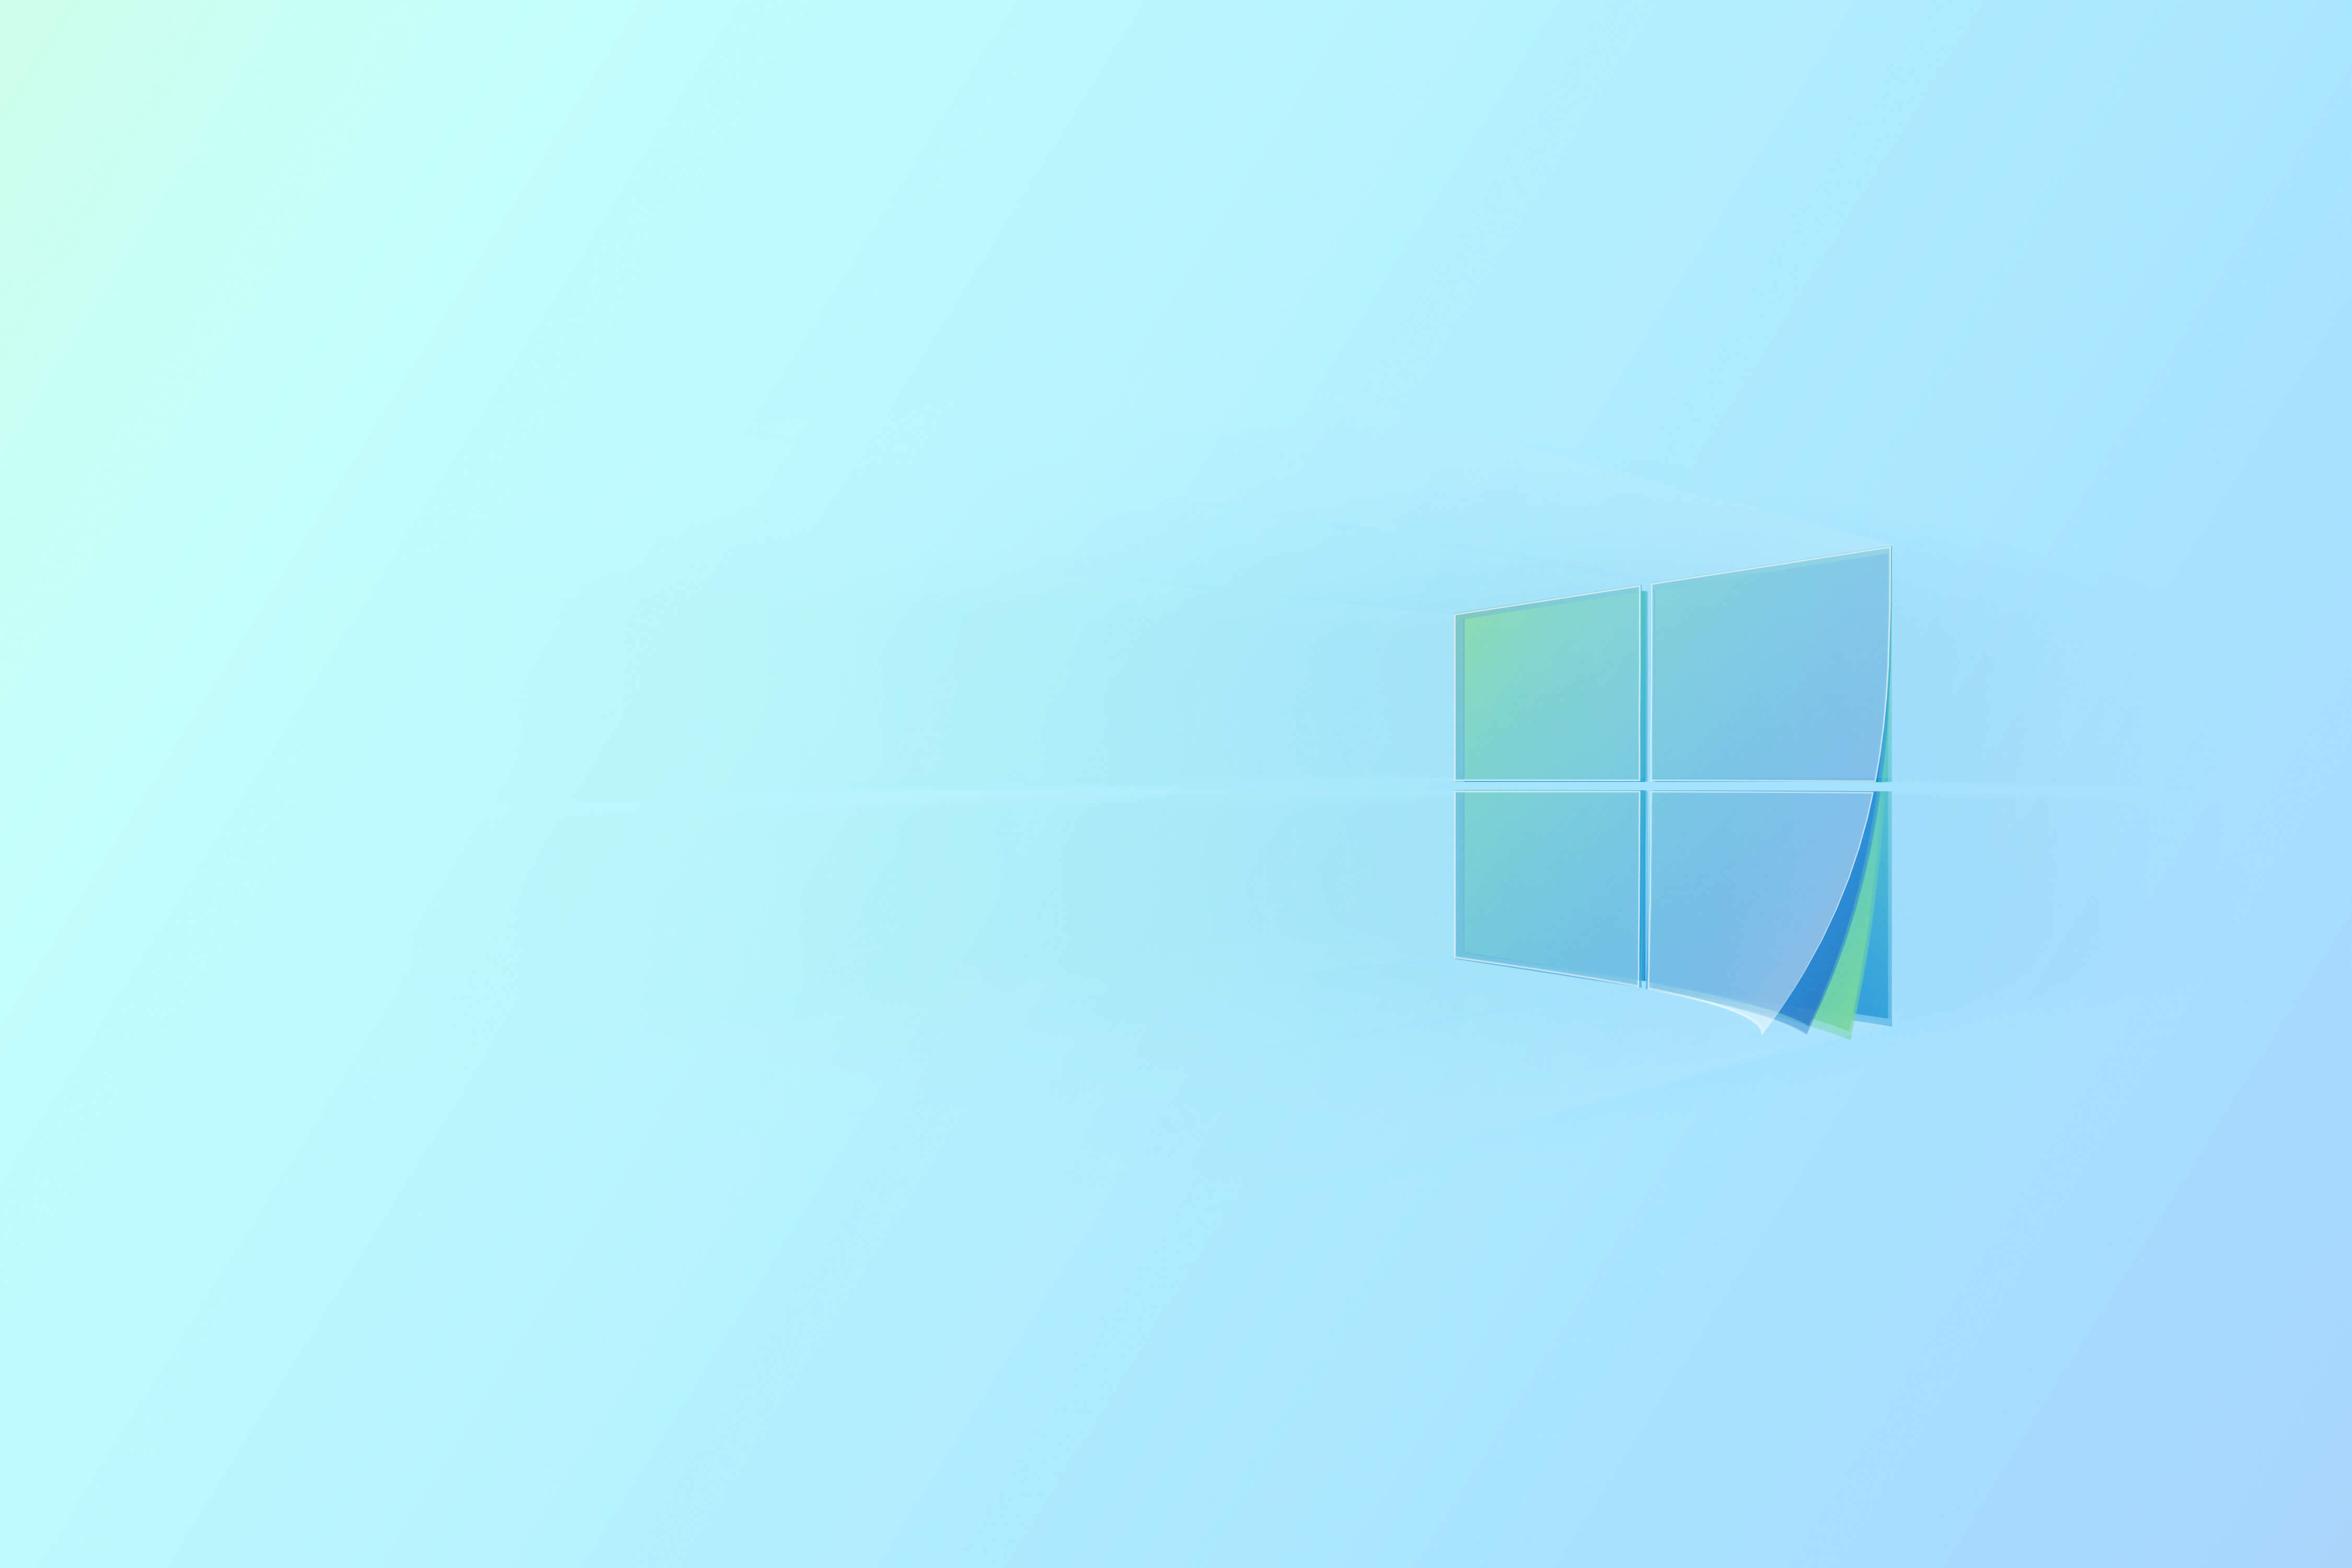 Windows 10 and Dark Fluent wallpaper 4pcs [DOWNLOAD FREE]